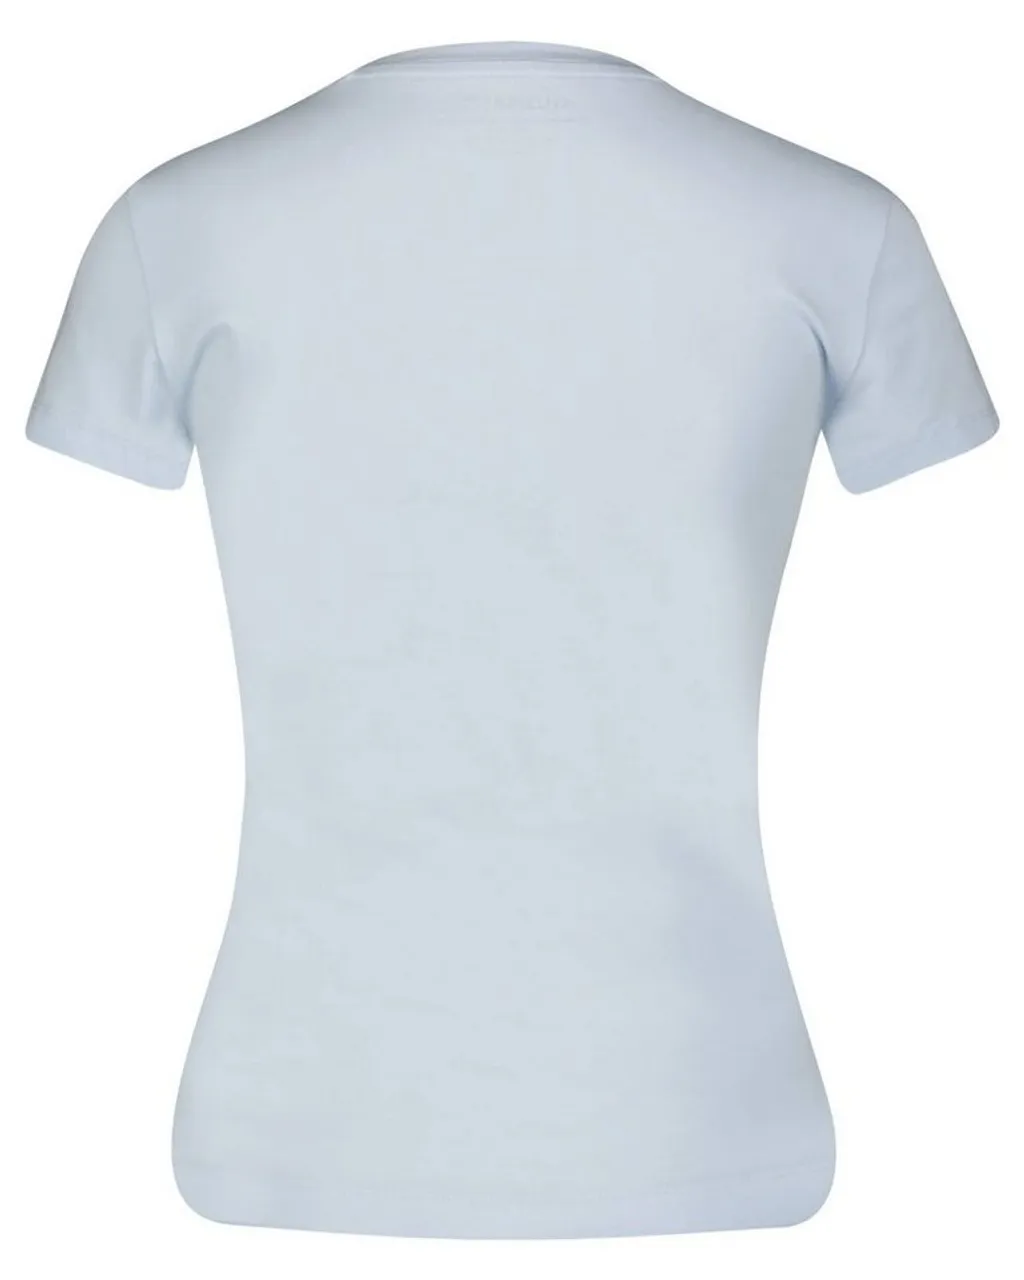 Guess T-Shirt Damen T-Shirt (1-tlg)